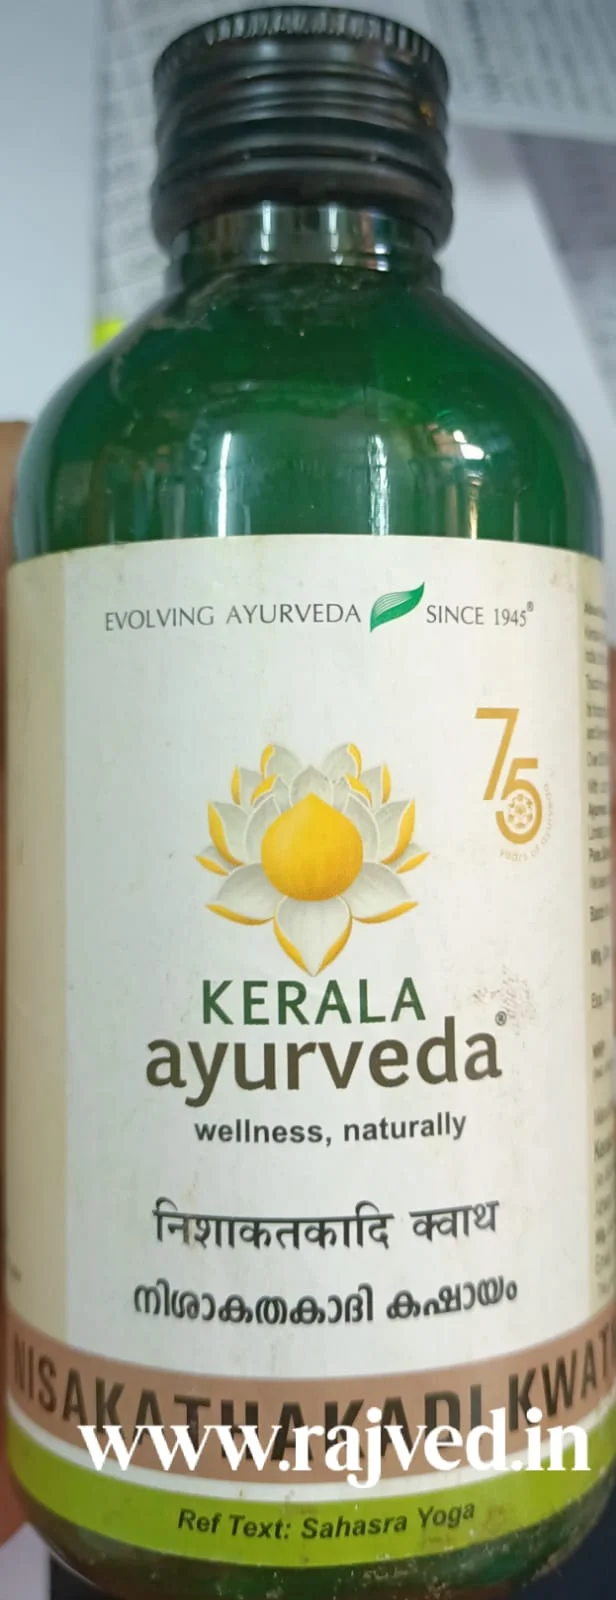 Nisakathakadi kwath 200 ml kerala ayurveda Ltd